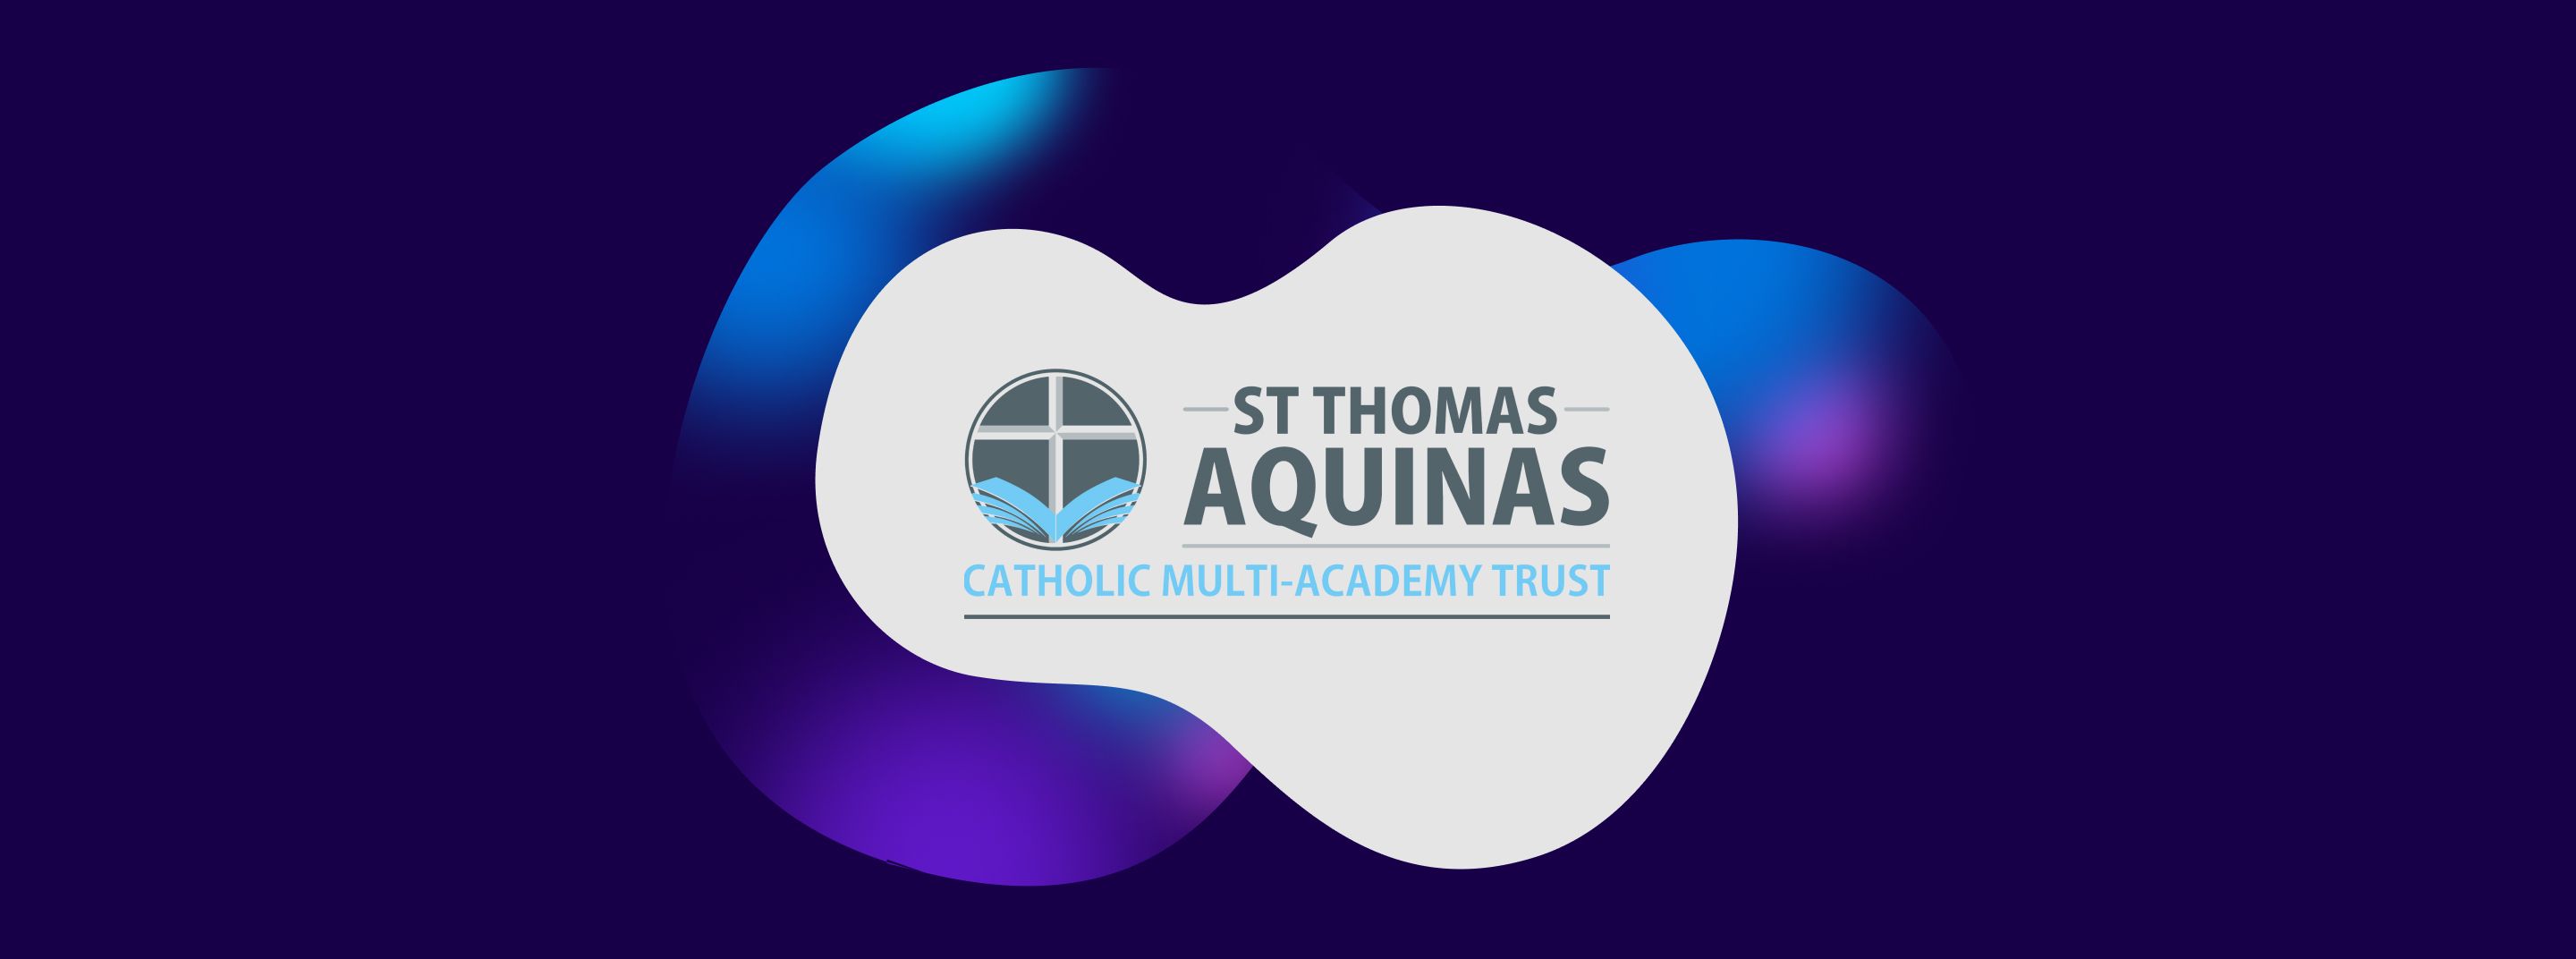 Logo of St Thomas Aquinas on white background with a dark blue background